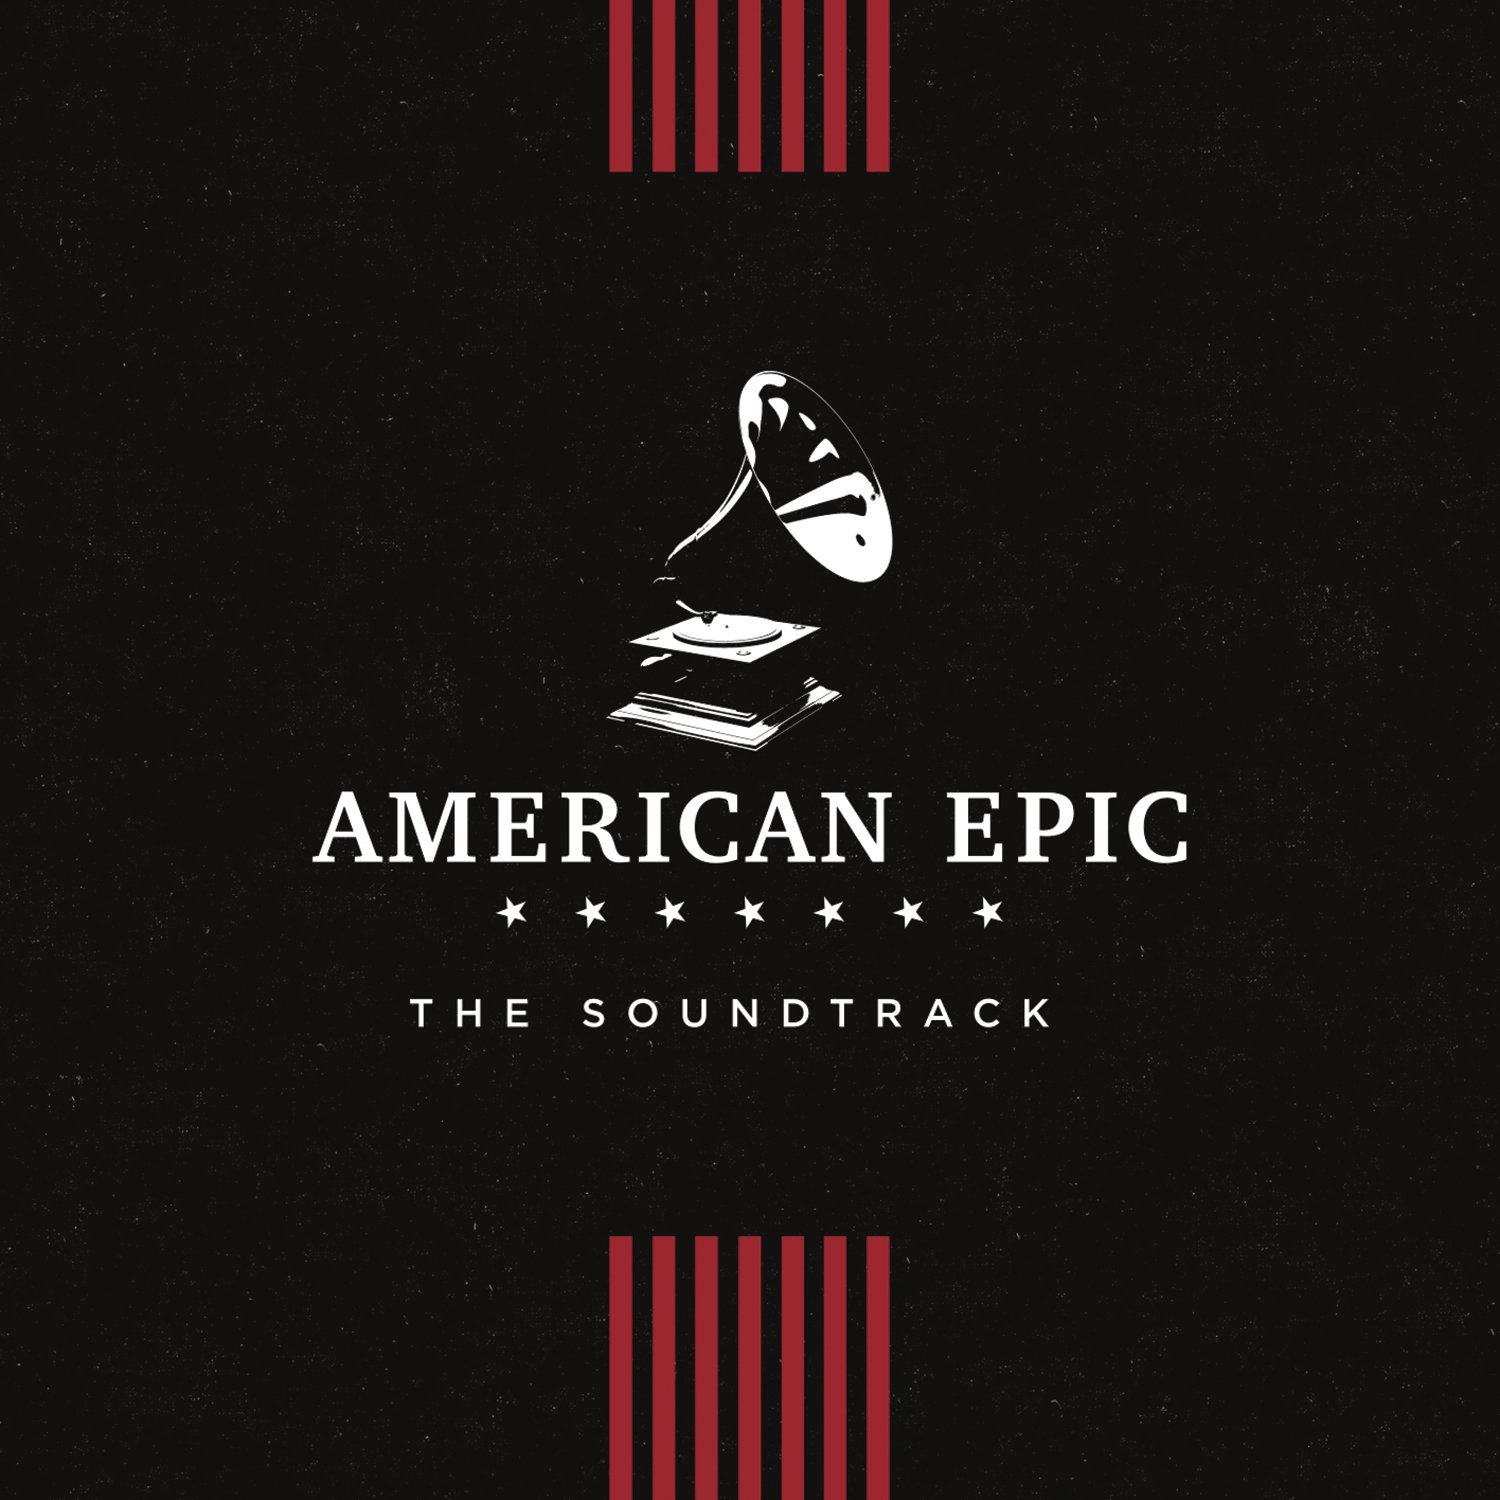 Various Artists - American Epic: The Soundtrack (2017) [HDTracks FLAC 24bit/96kHz]